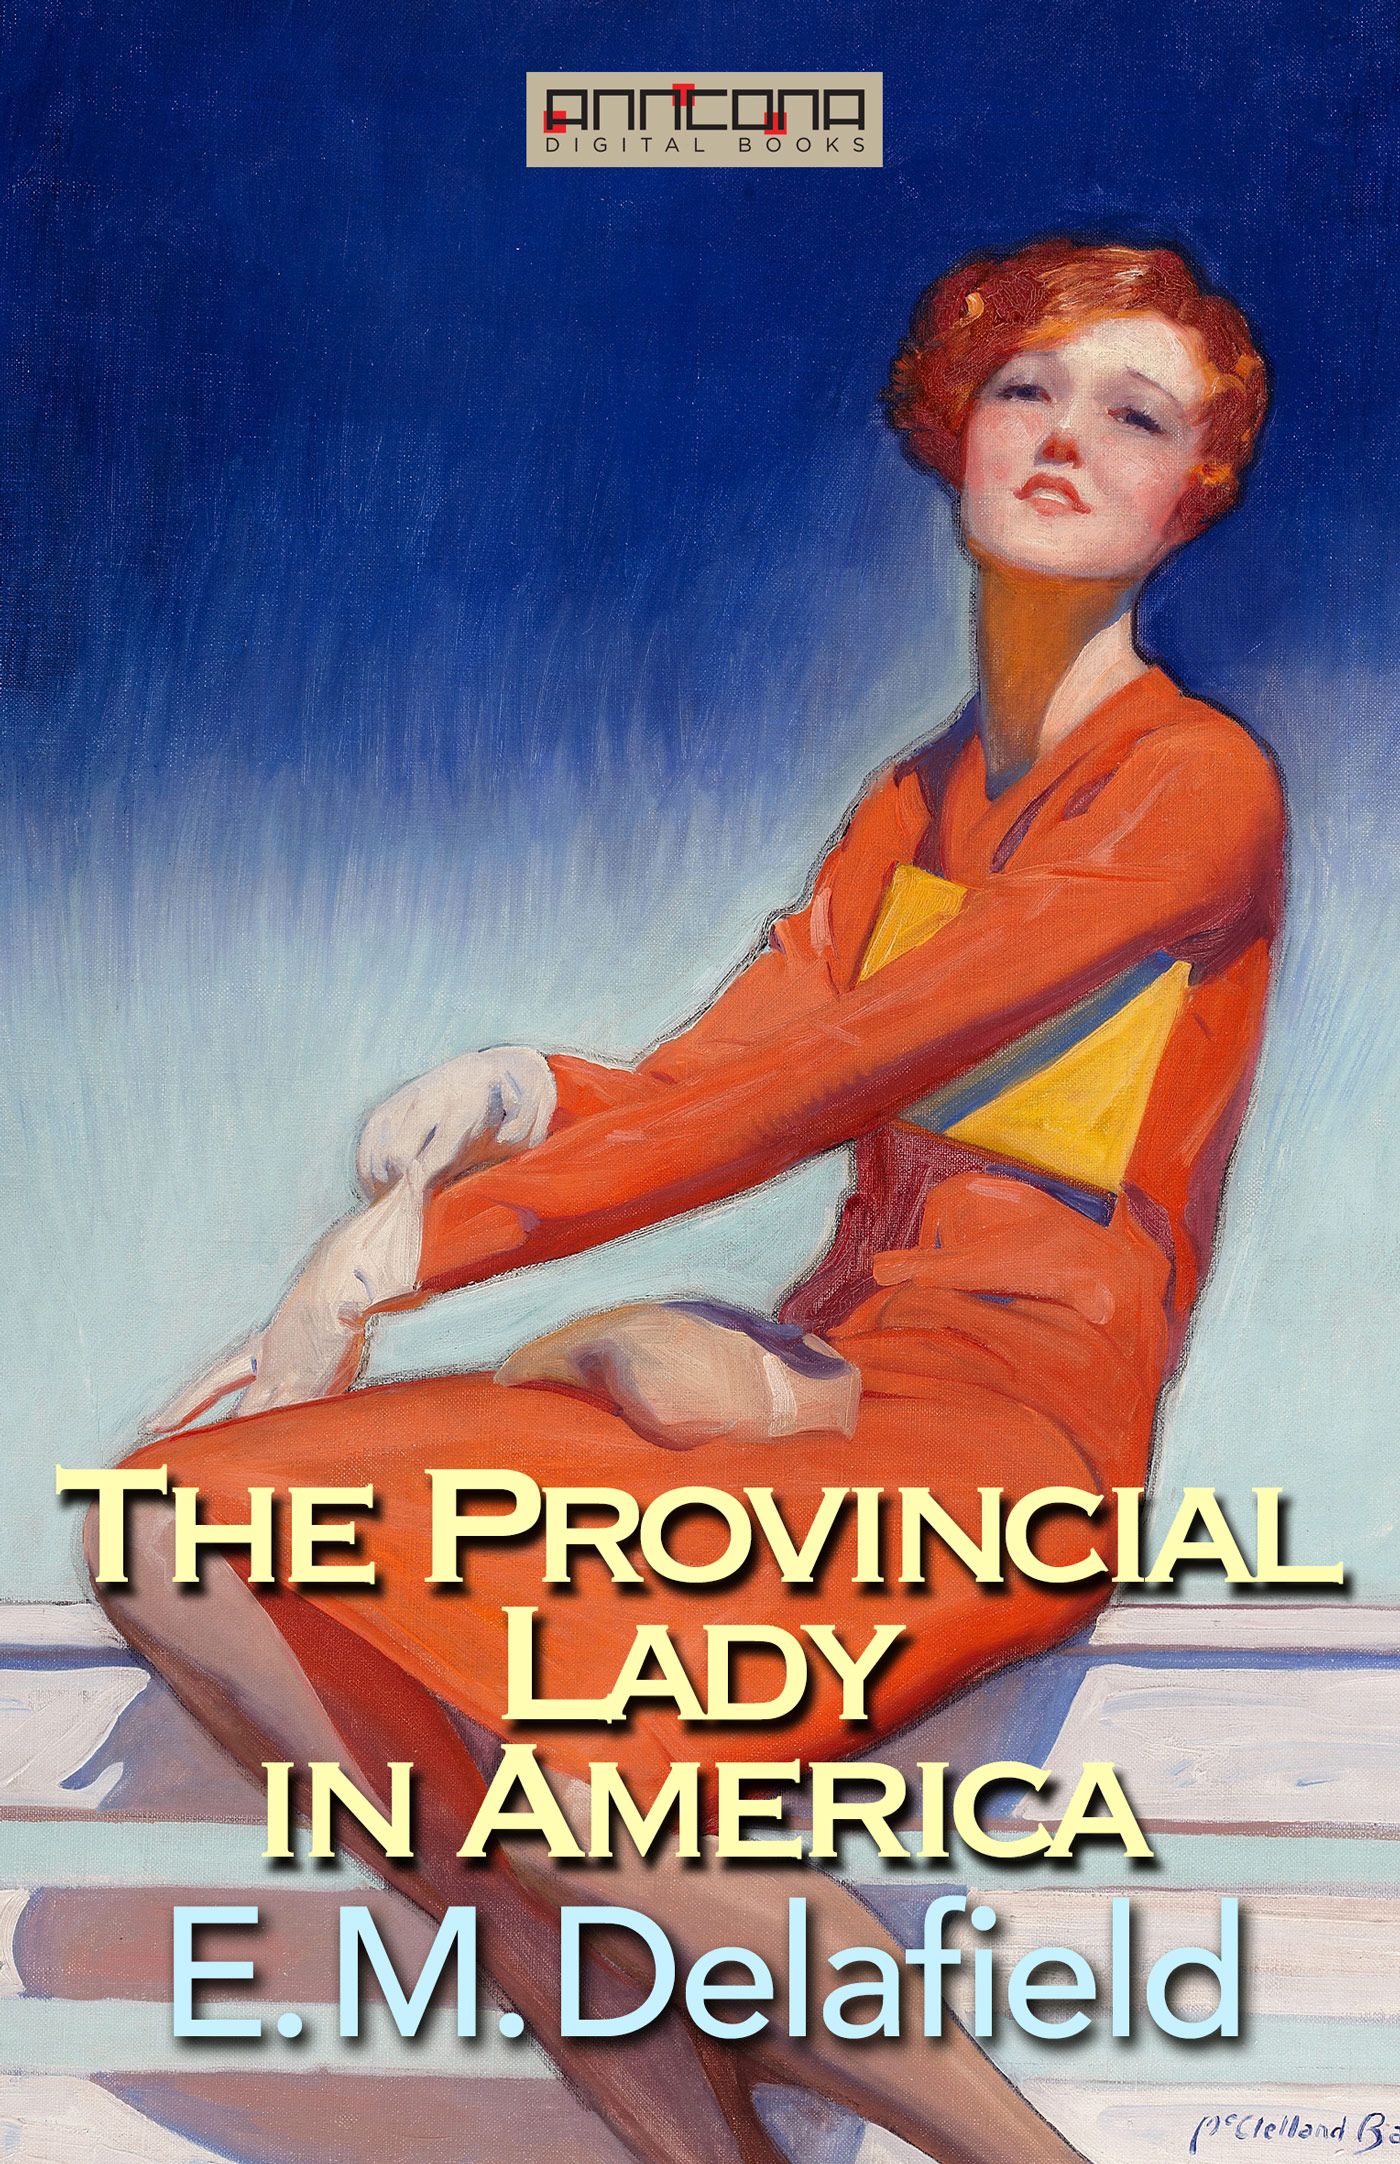 The Provincial Lady in America, eBook by E. M. Delafield